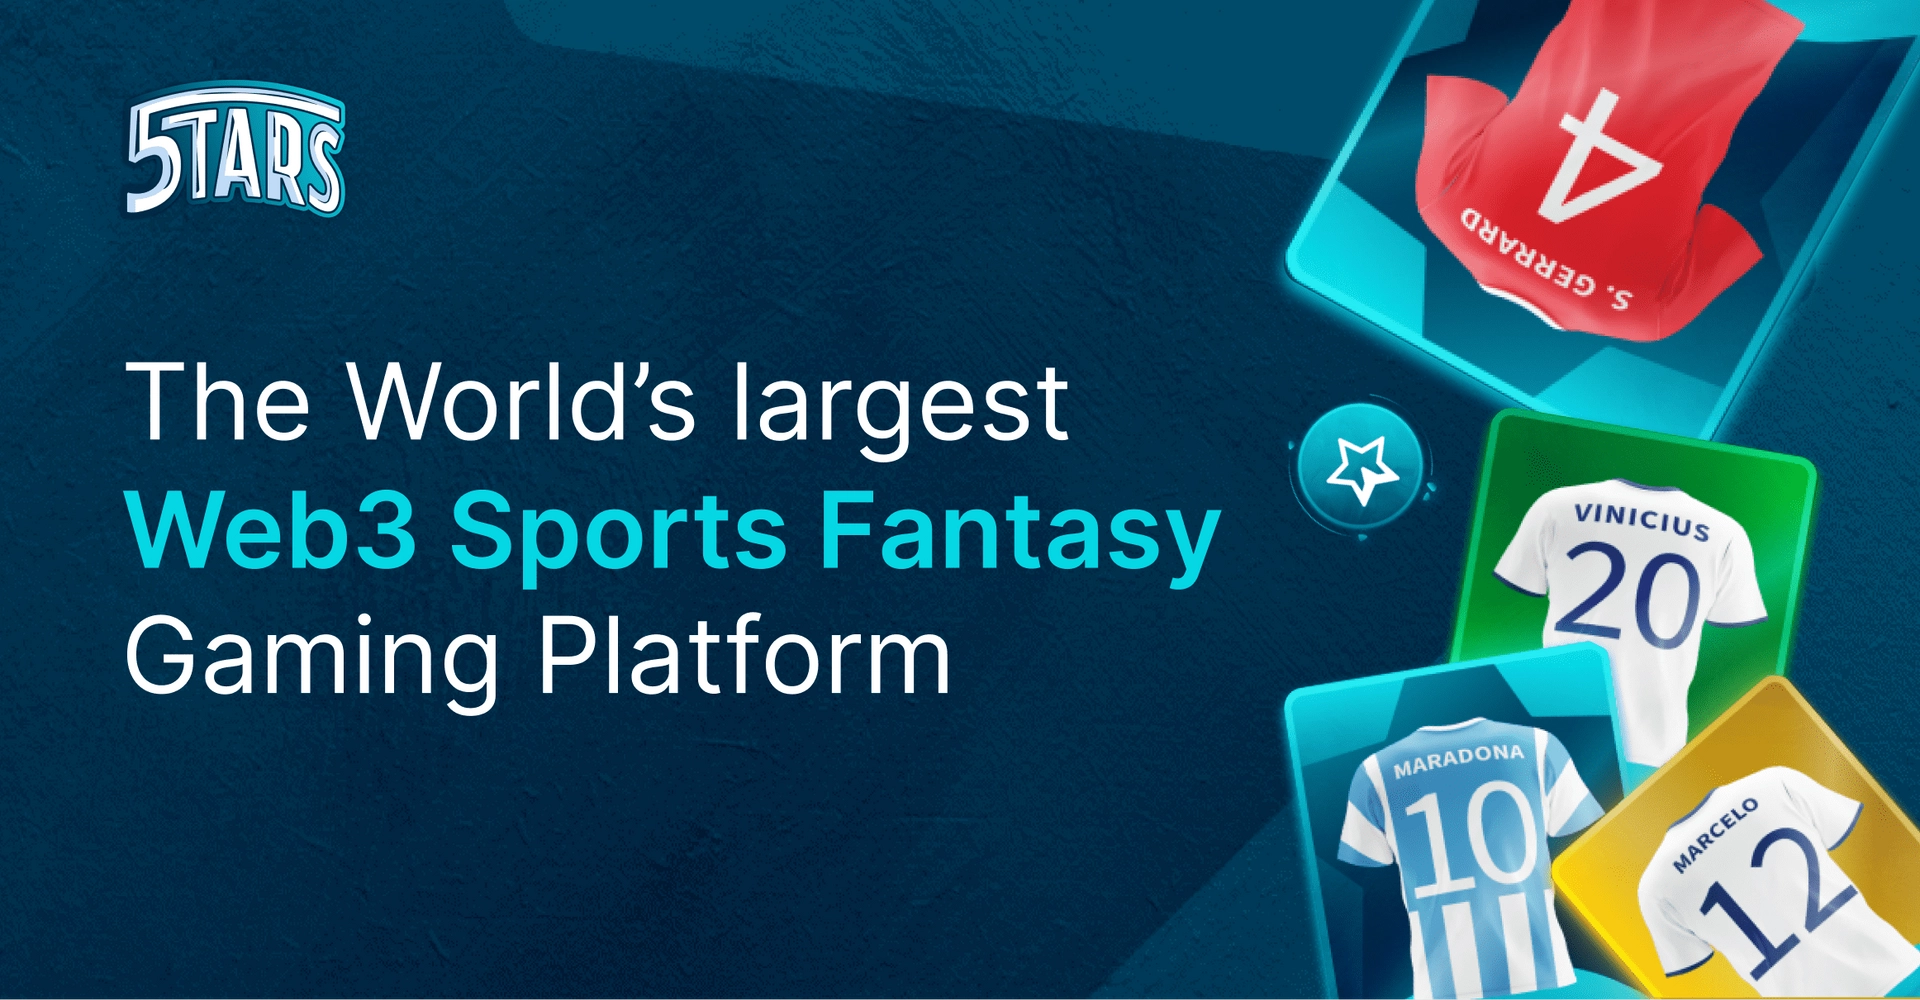 5TARS The World’s largest Web3 Sports Fantasy Gaming Platform